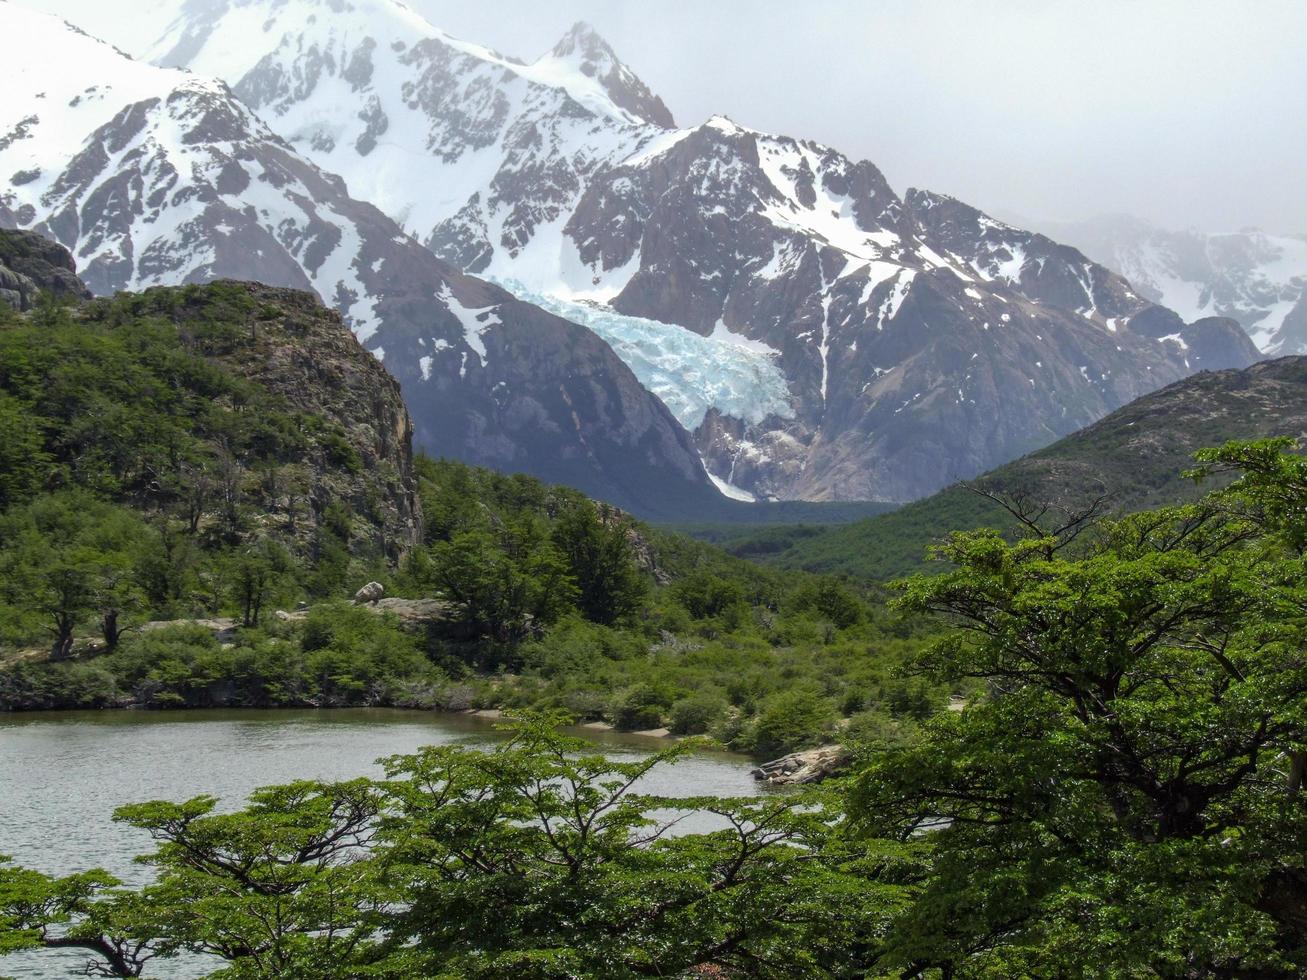 Mount Fitz roy at Los Glaciares national park, Argentina, patagonia photo